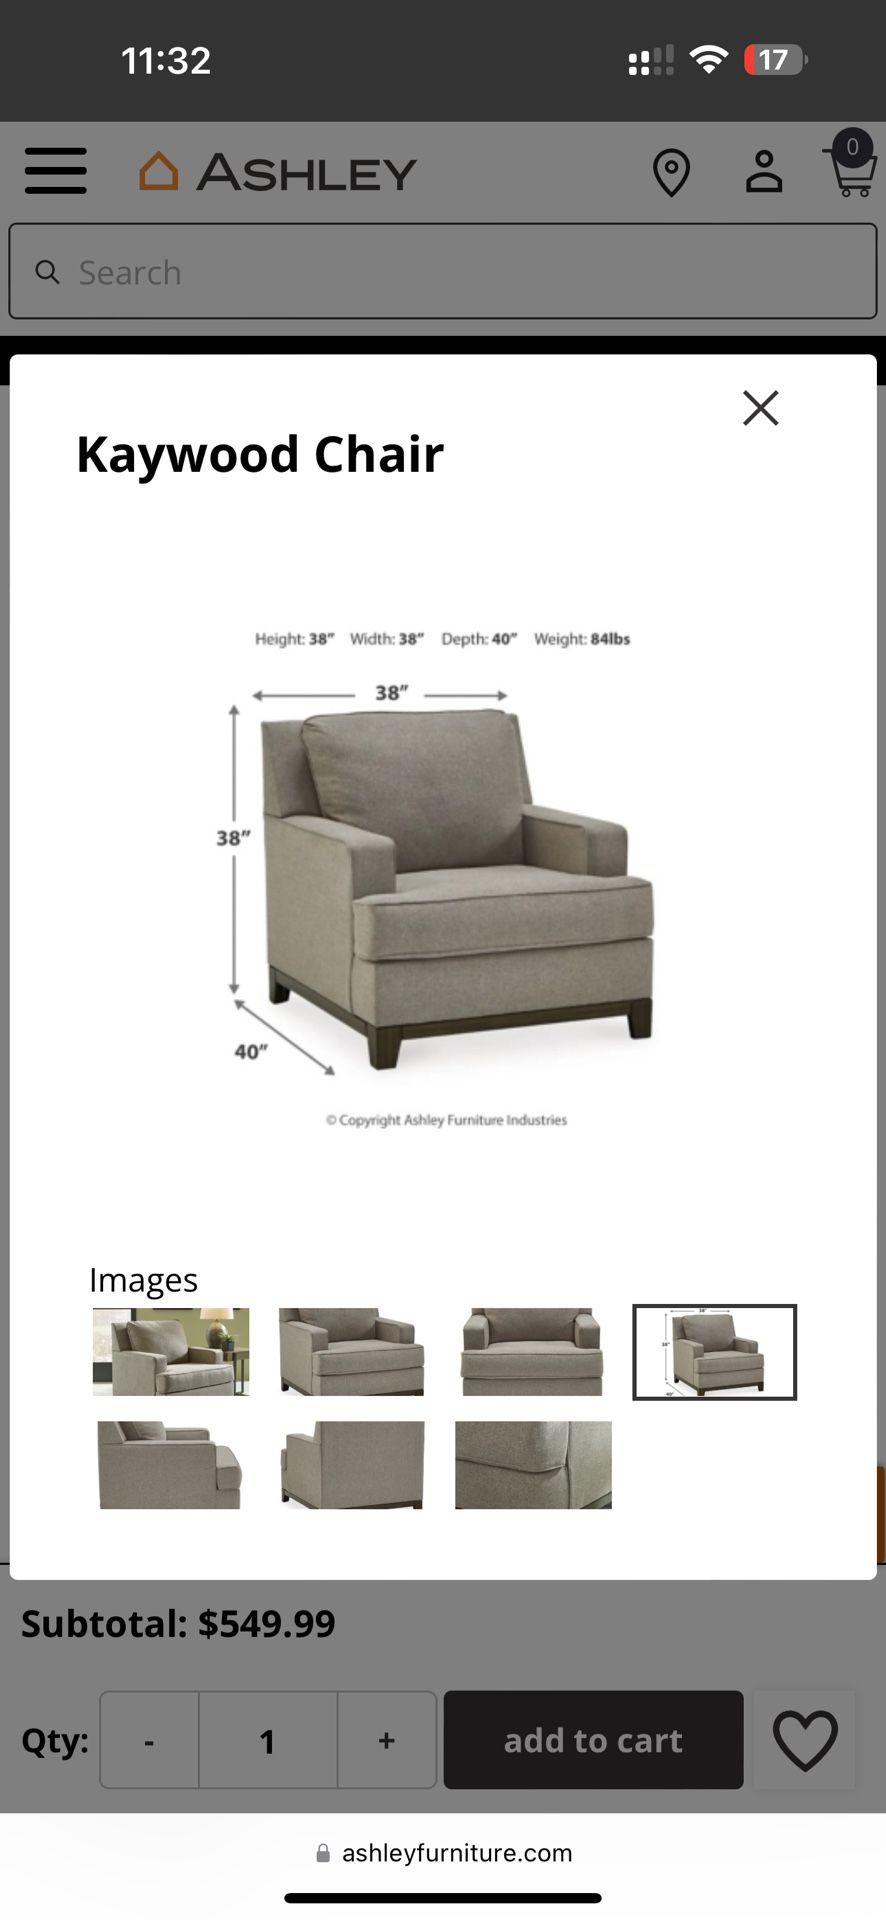 Brand New ashley Brand sofa chair And Ottoman